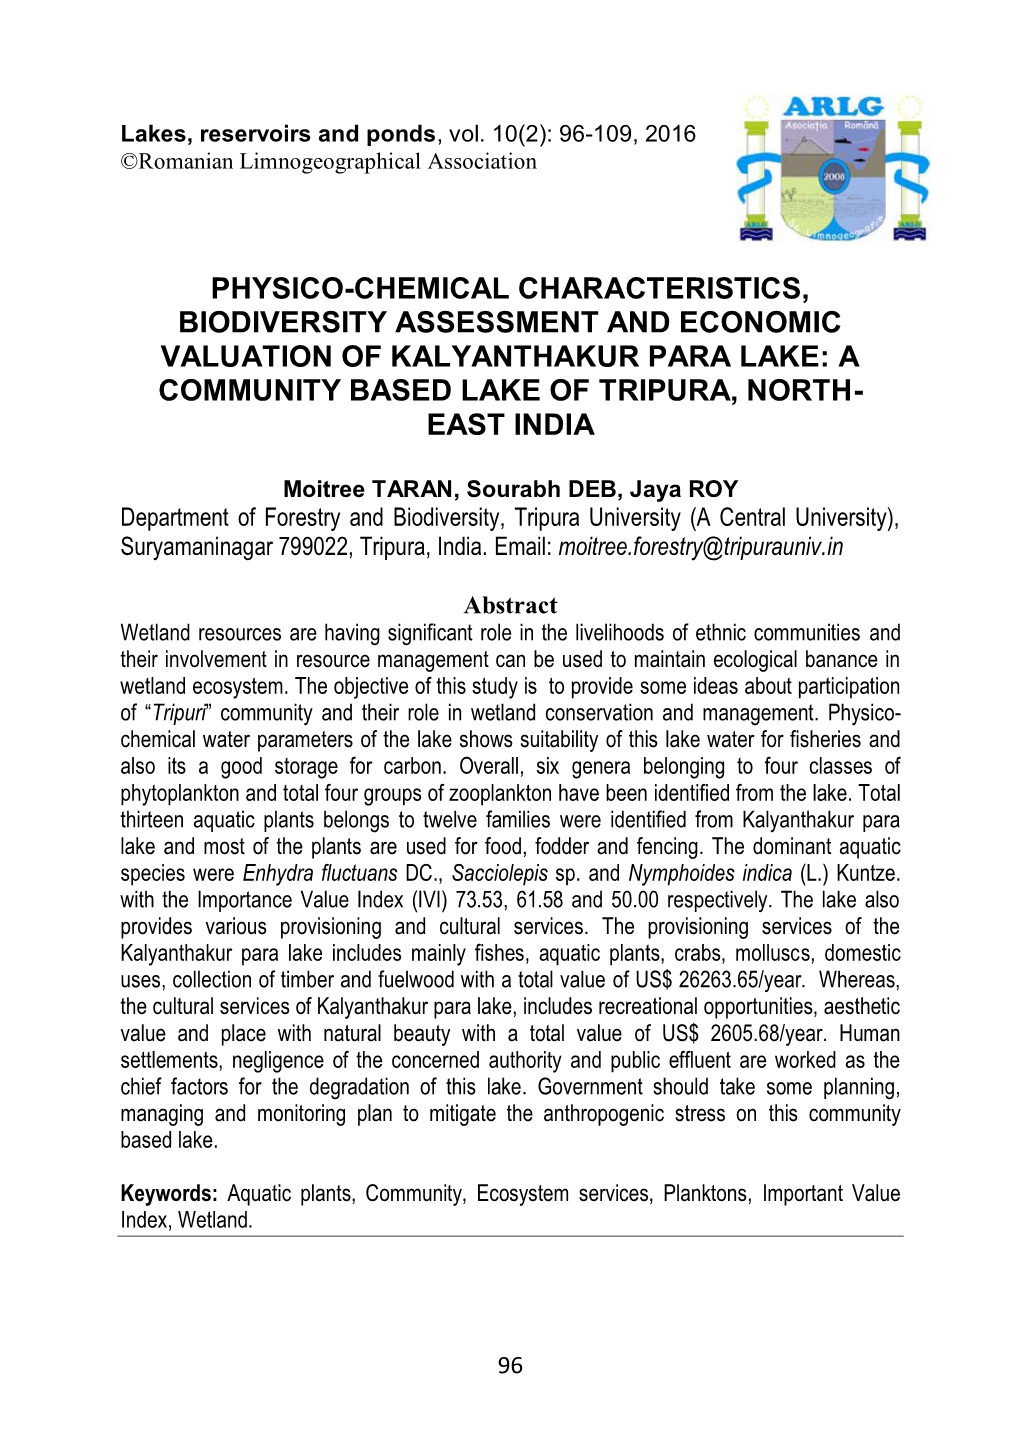 Physico-Chemical Characteristics, Biodiversity Assessment and Economic Valuation of Kalyanthakur Para Lake: a Community Based Lake of Tripura, North- East India